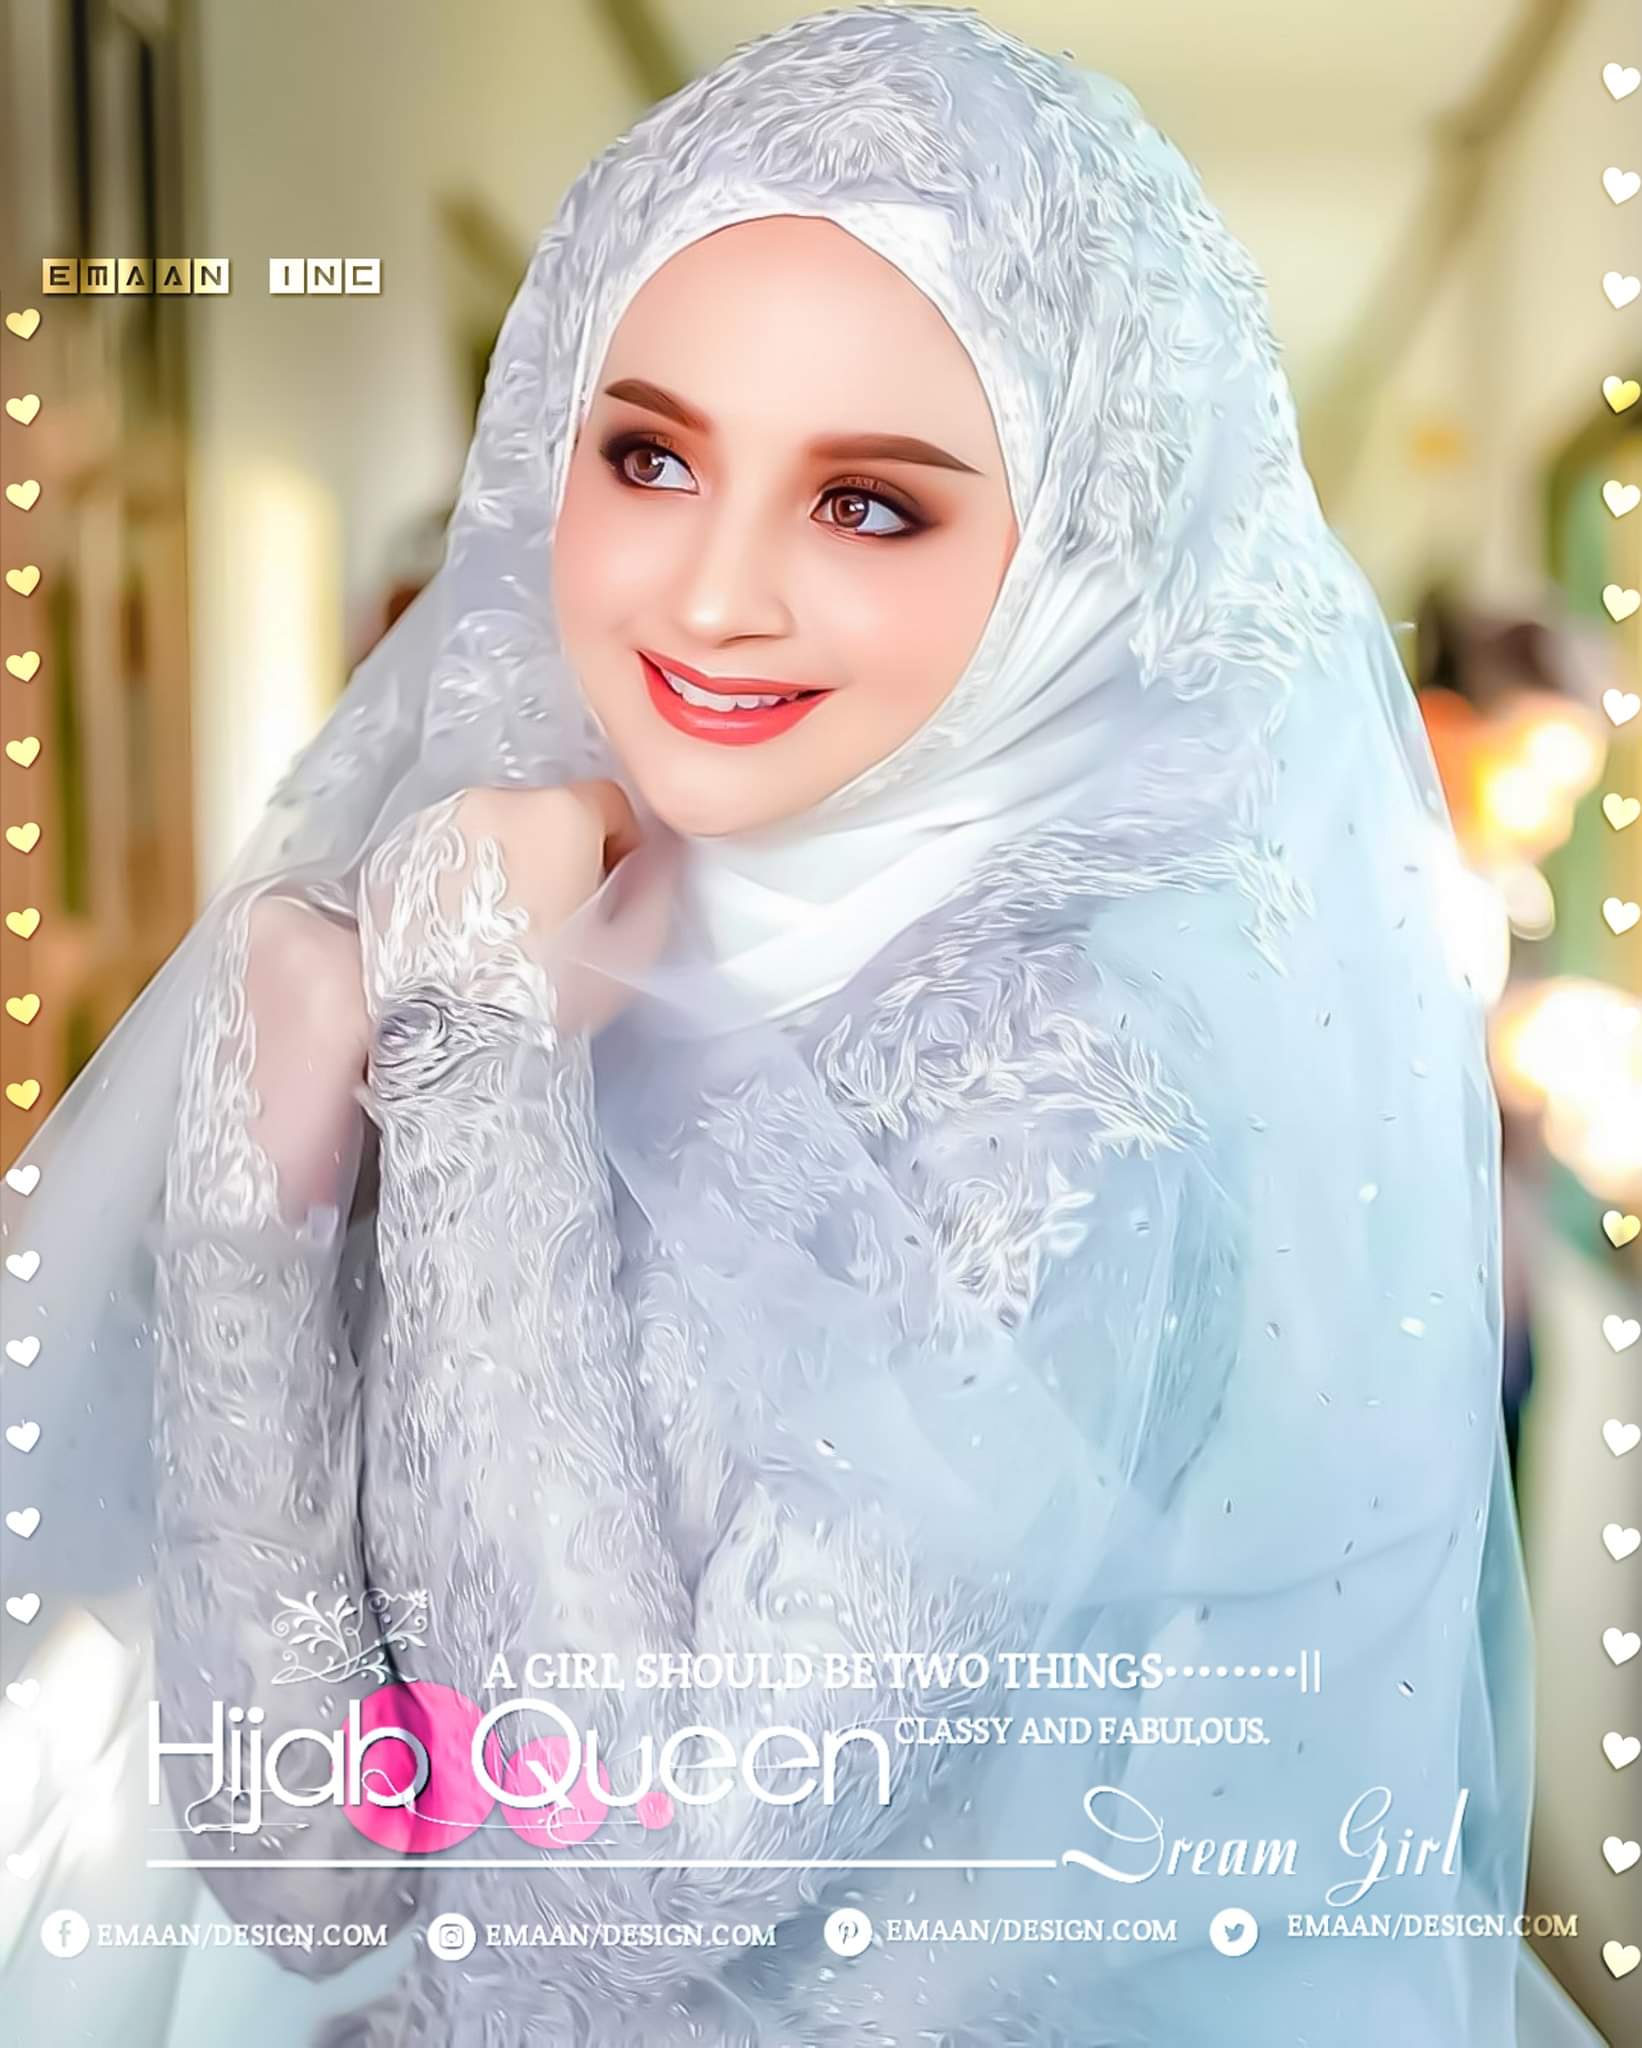 Muslim Hijab Girls Telegraph